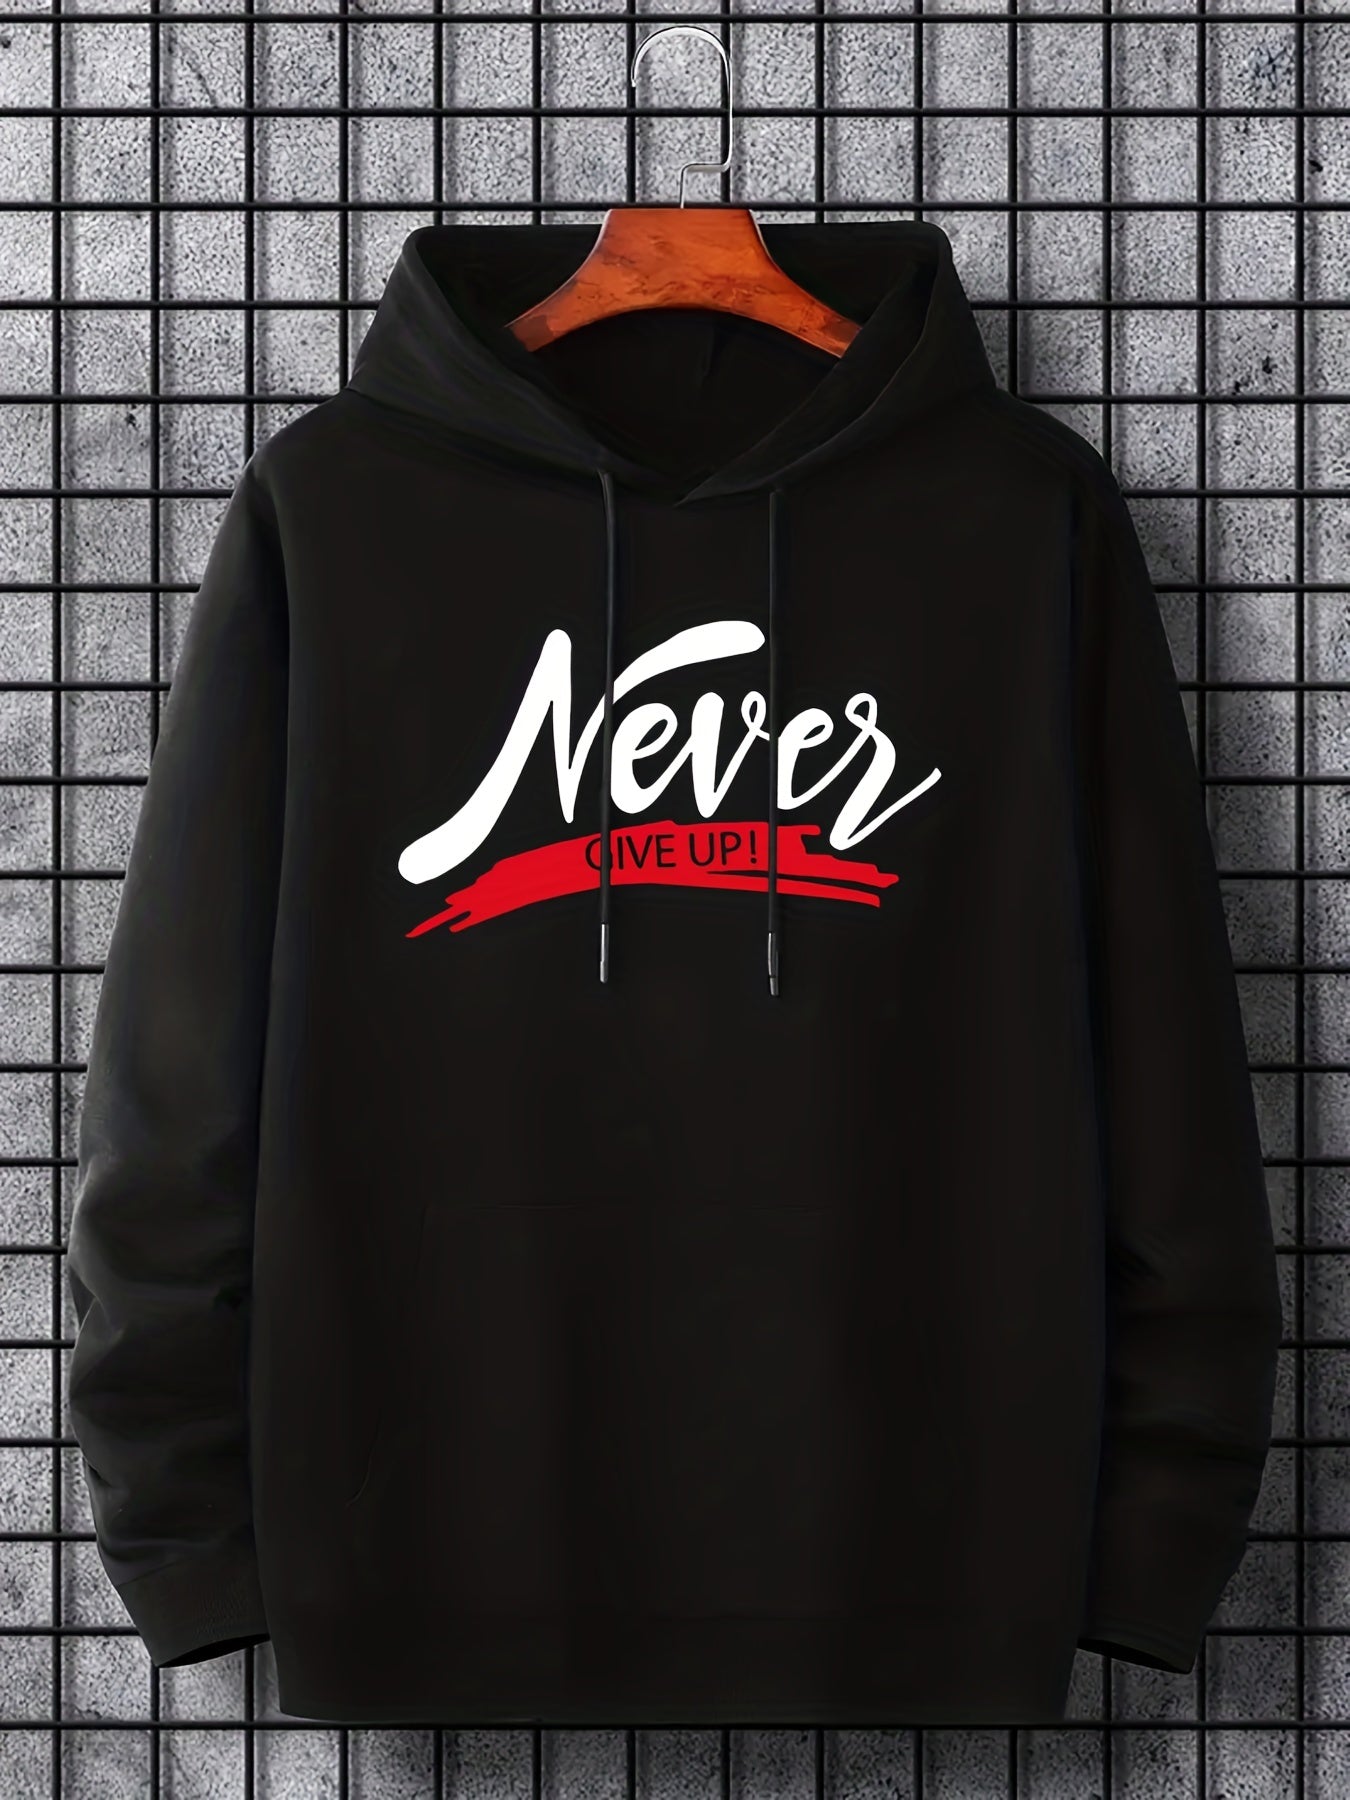 Never Give Up (2) Men’s Christian Pullover Hooded Sweatshirt claimedbygoddesigns